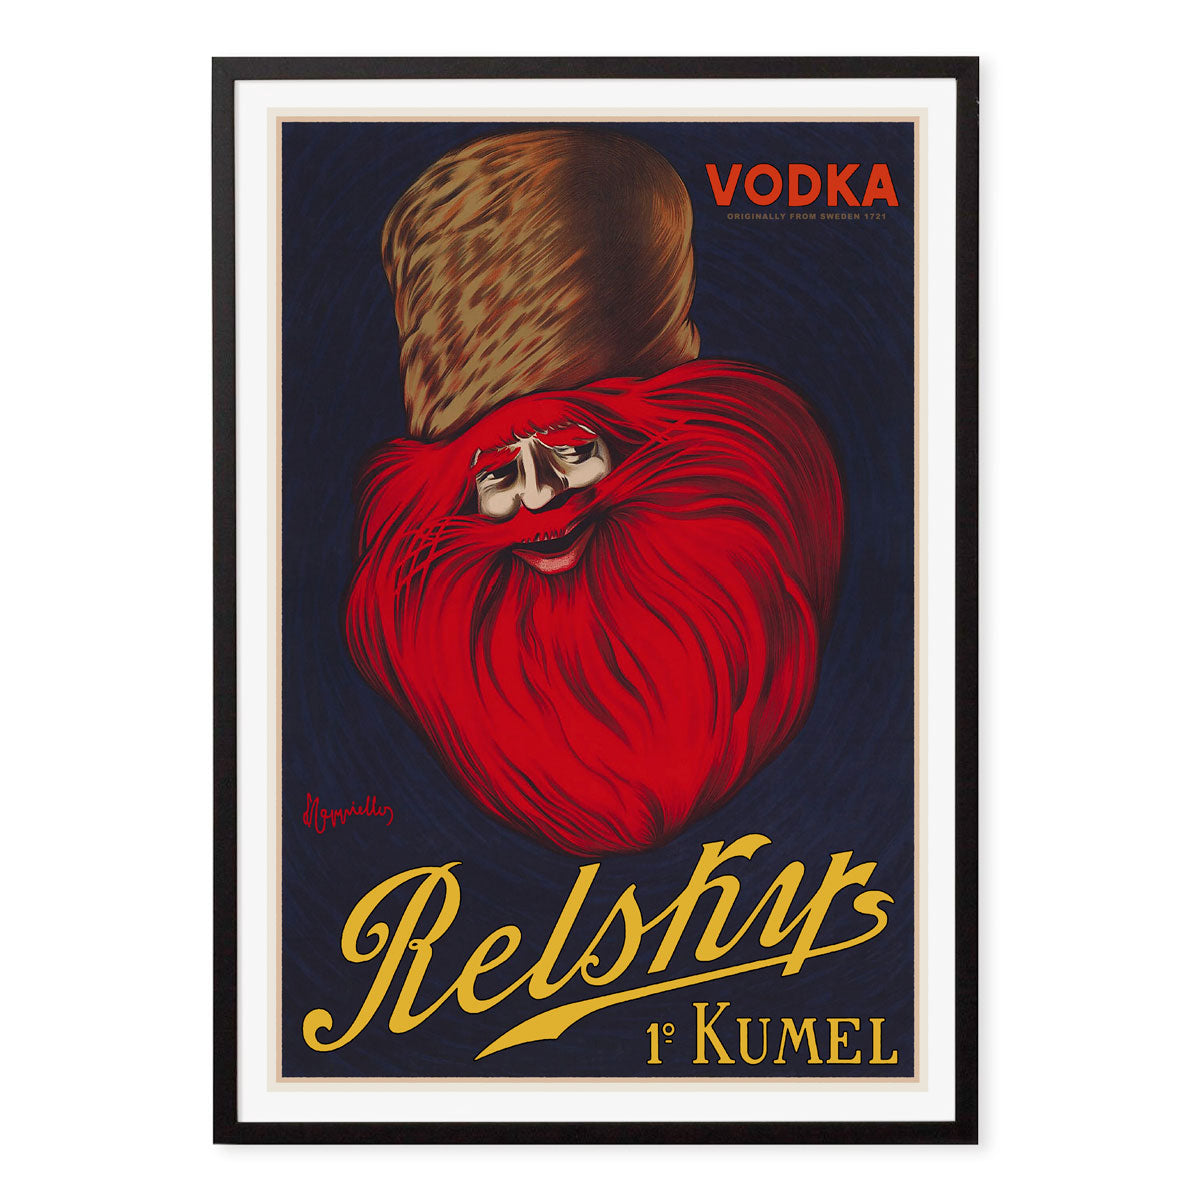 Relskys Vodka retro vintage black framed print from Places We Luv